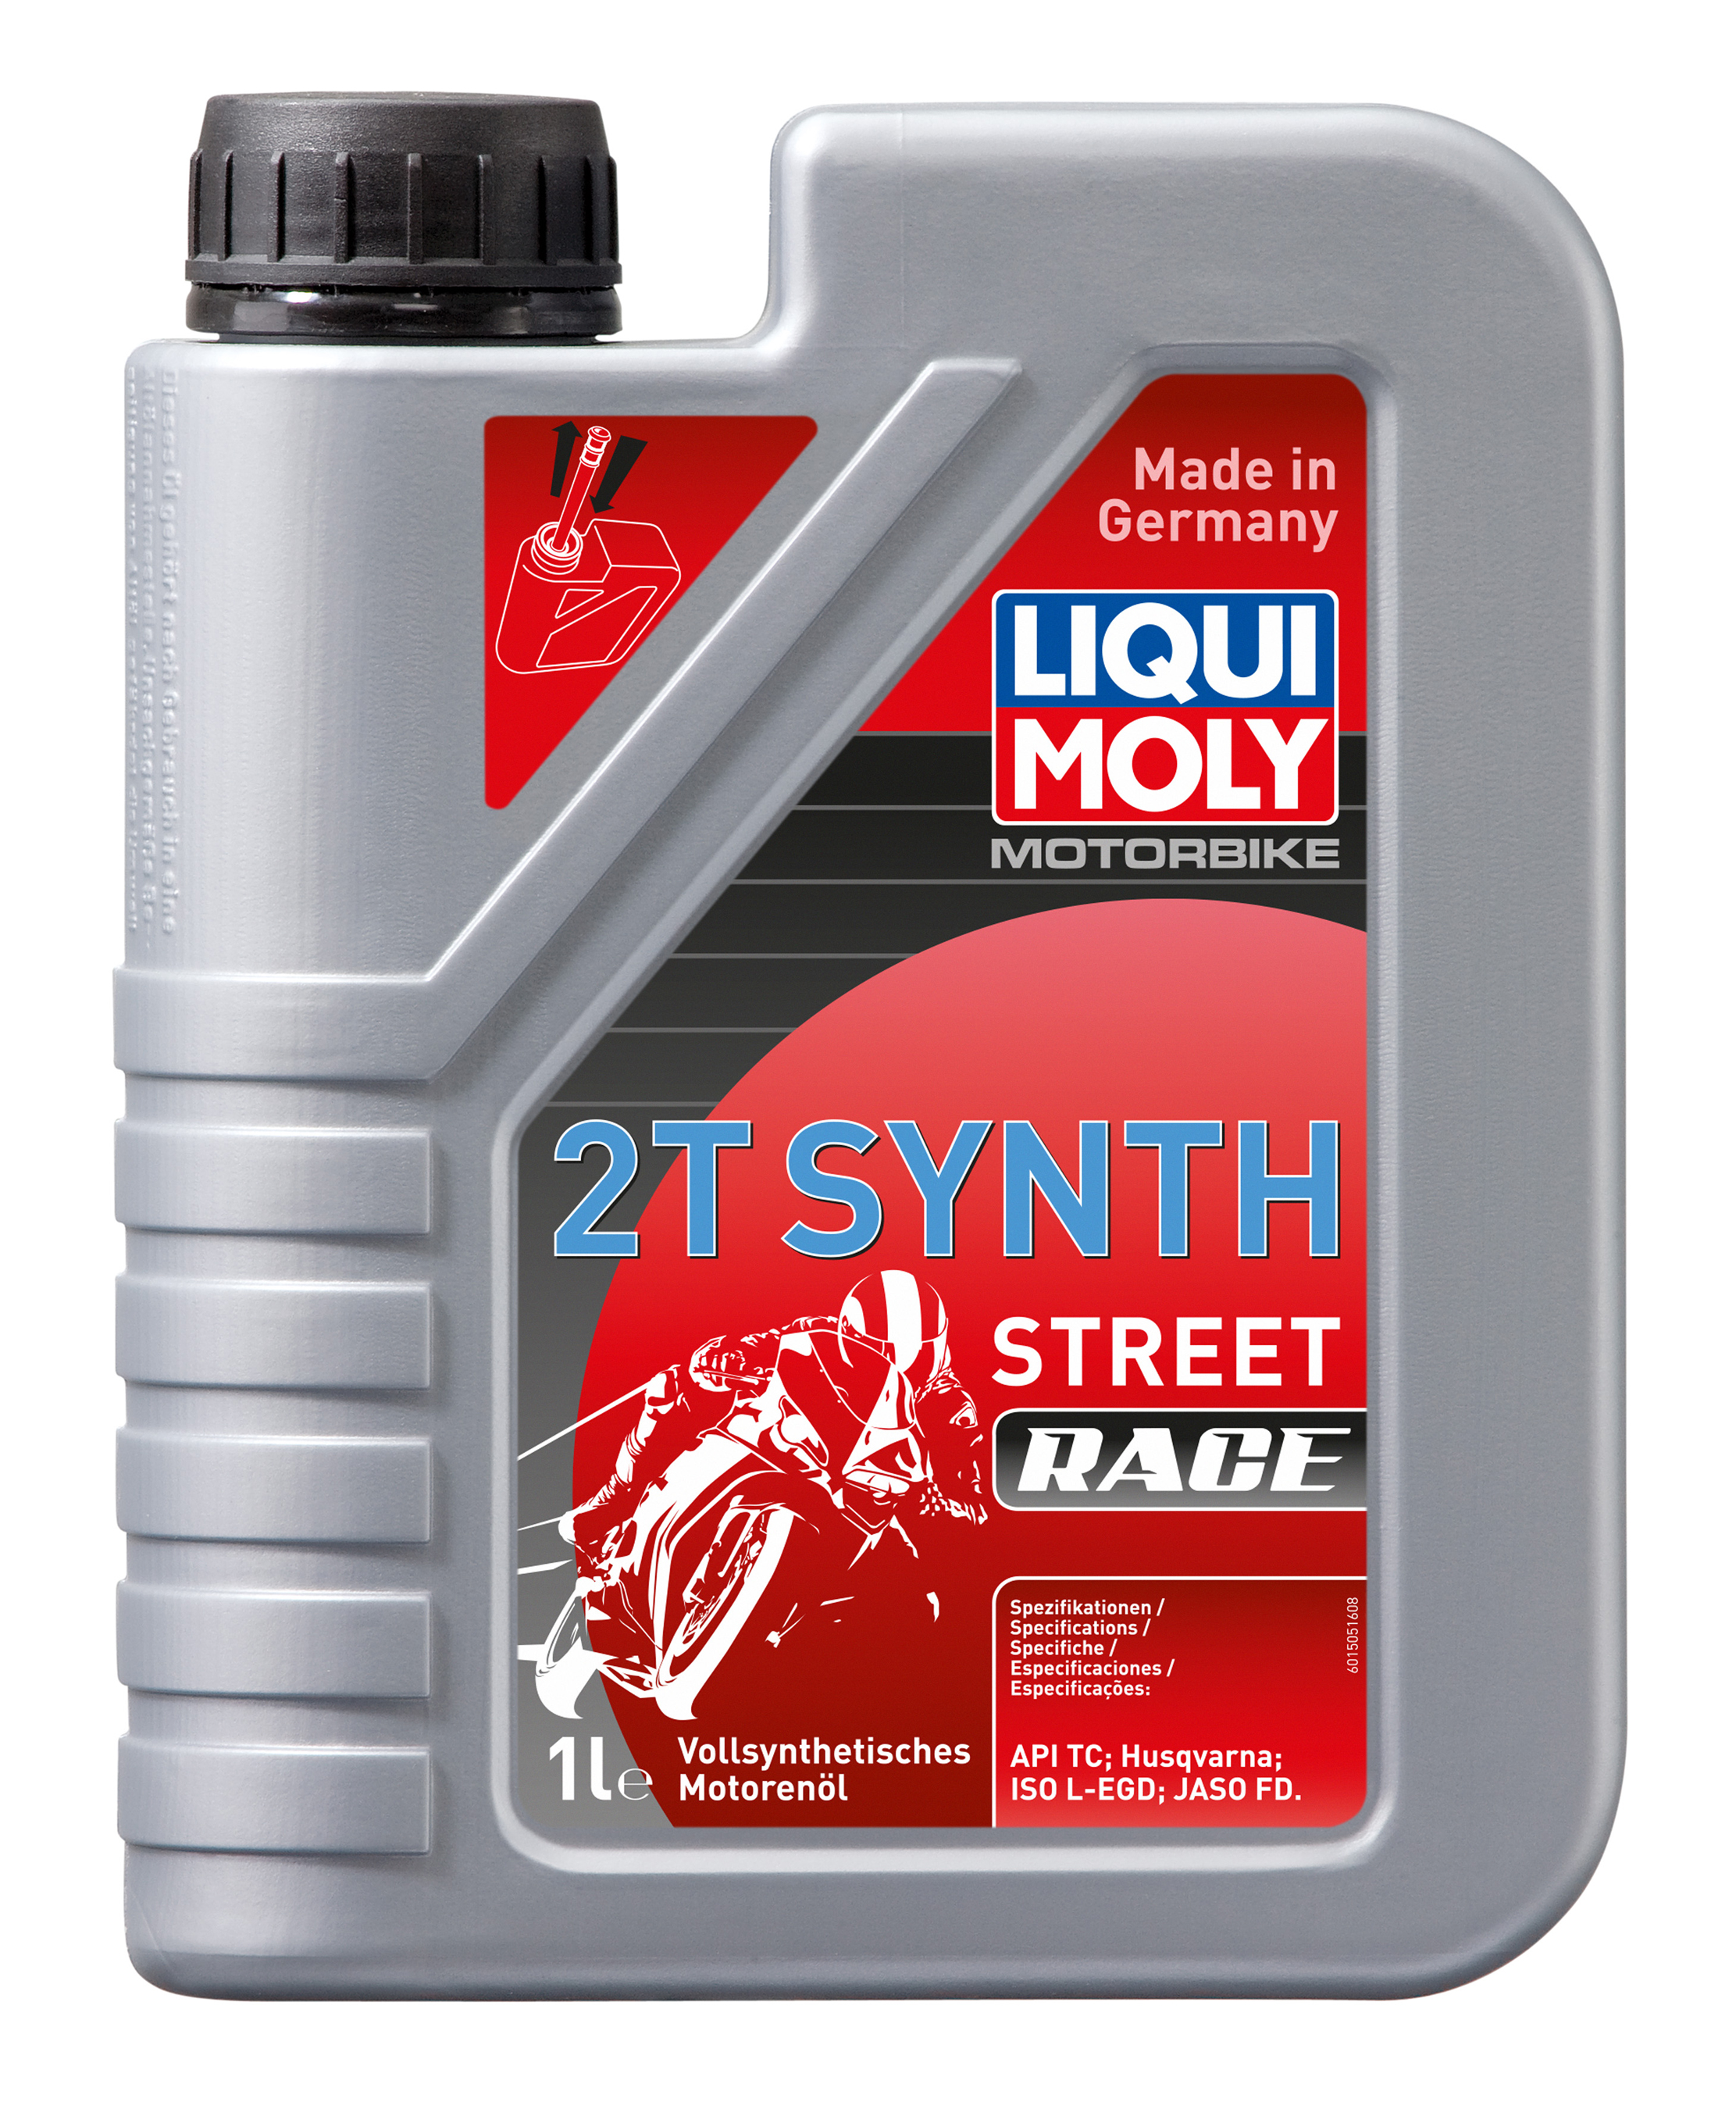 Liqui Moly Motoröl Motorbike 2T Synth Street Race
 1 Liter